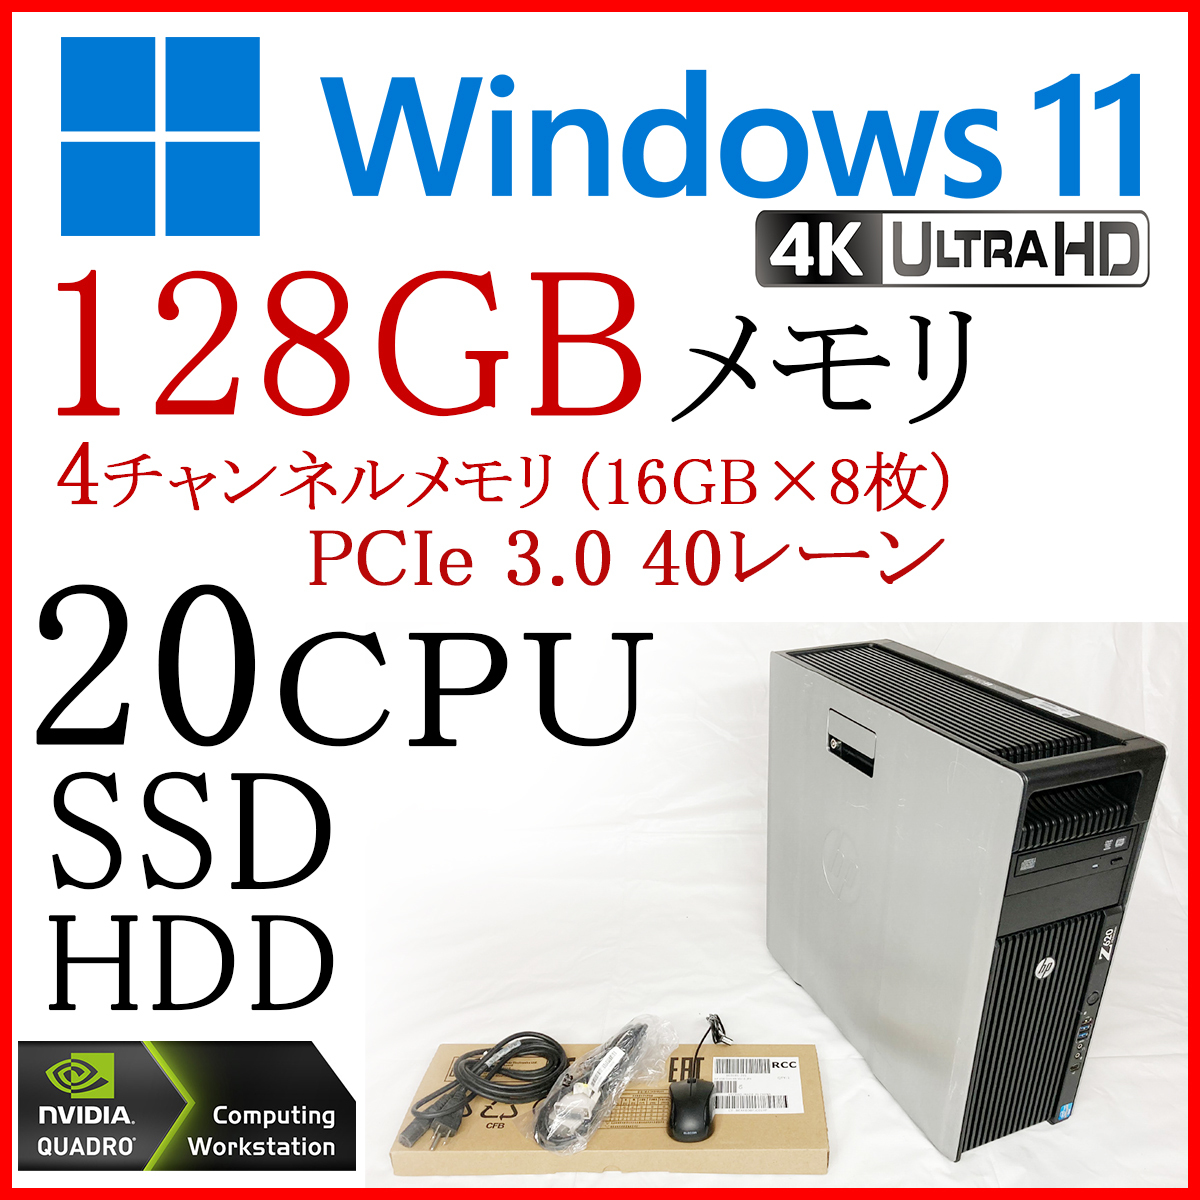 20CPU 128GB 大量メモリ i7 i9超 Xeon E5 HP Z620 SSD 240GB HDD 1TB 4K Windows11 まとめ 本体 キーボード マウス ケーブルセット 9F7_画像1